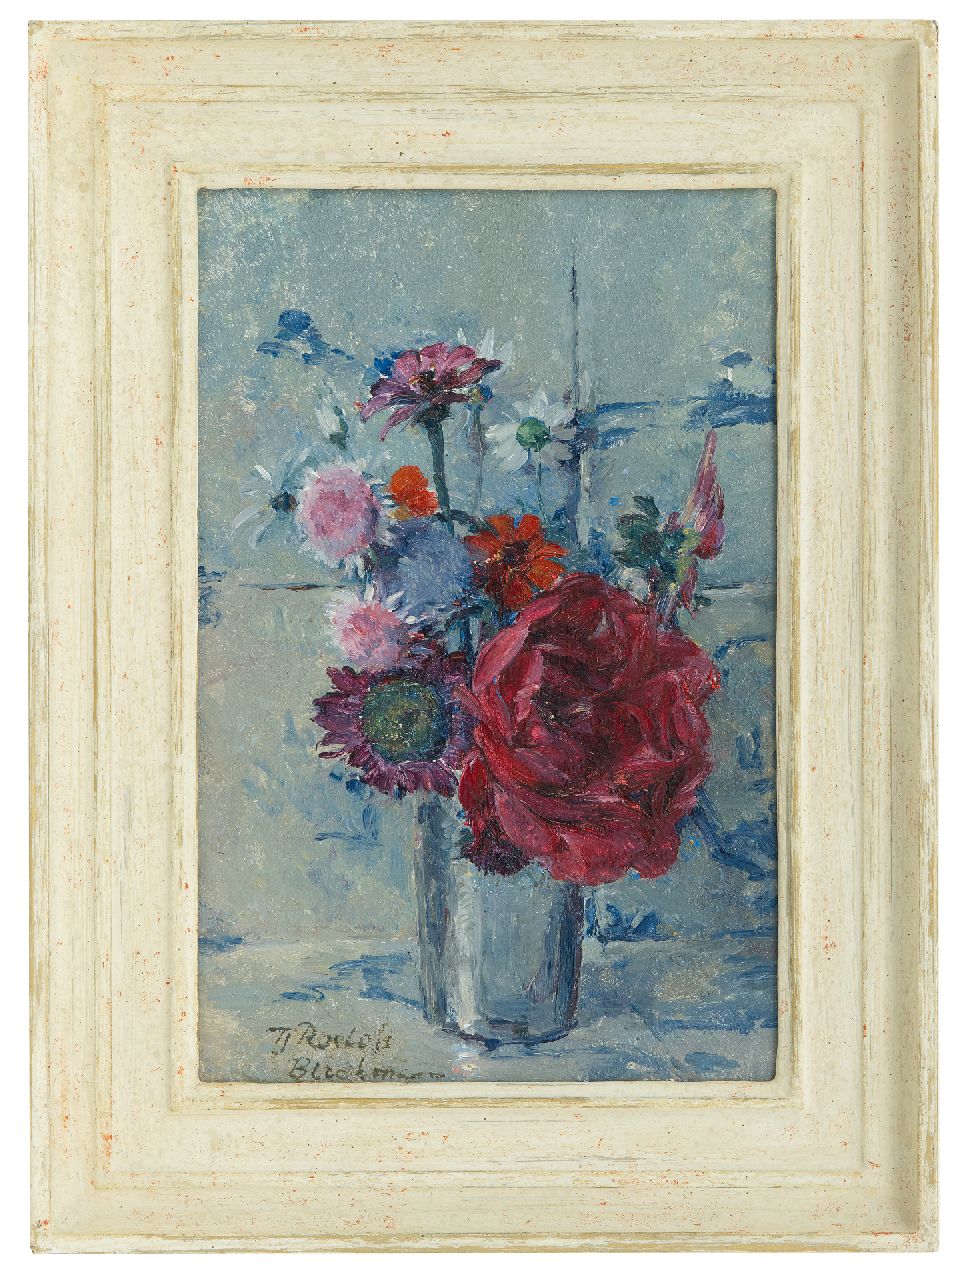 Roelofs-Bleckmann E.F.  | Elisabeth Francoise 'Tjieke' Roelofs-Bleckmann, Zomerbloemen in vaas, olieverf op paneel 29,8 x 18,8 cm, gesigneerd linksonder